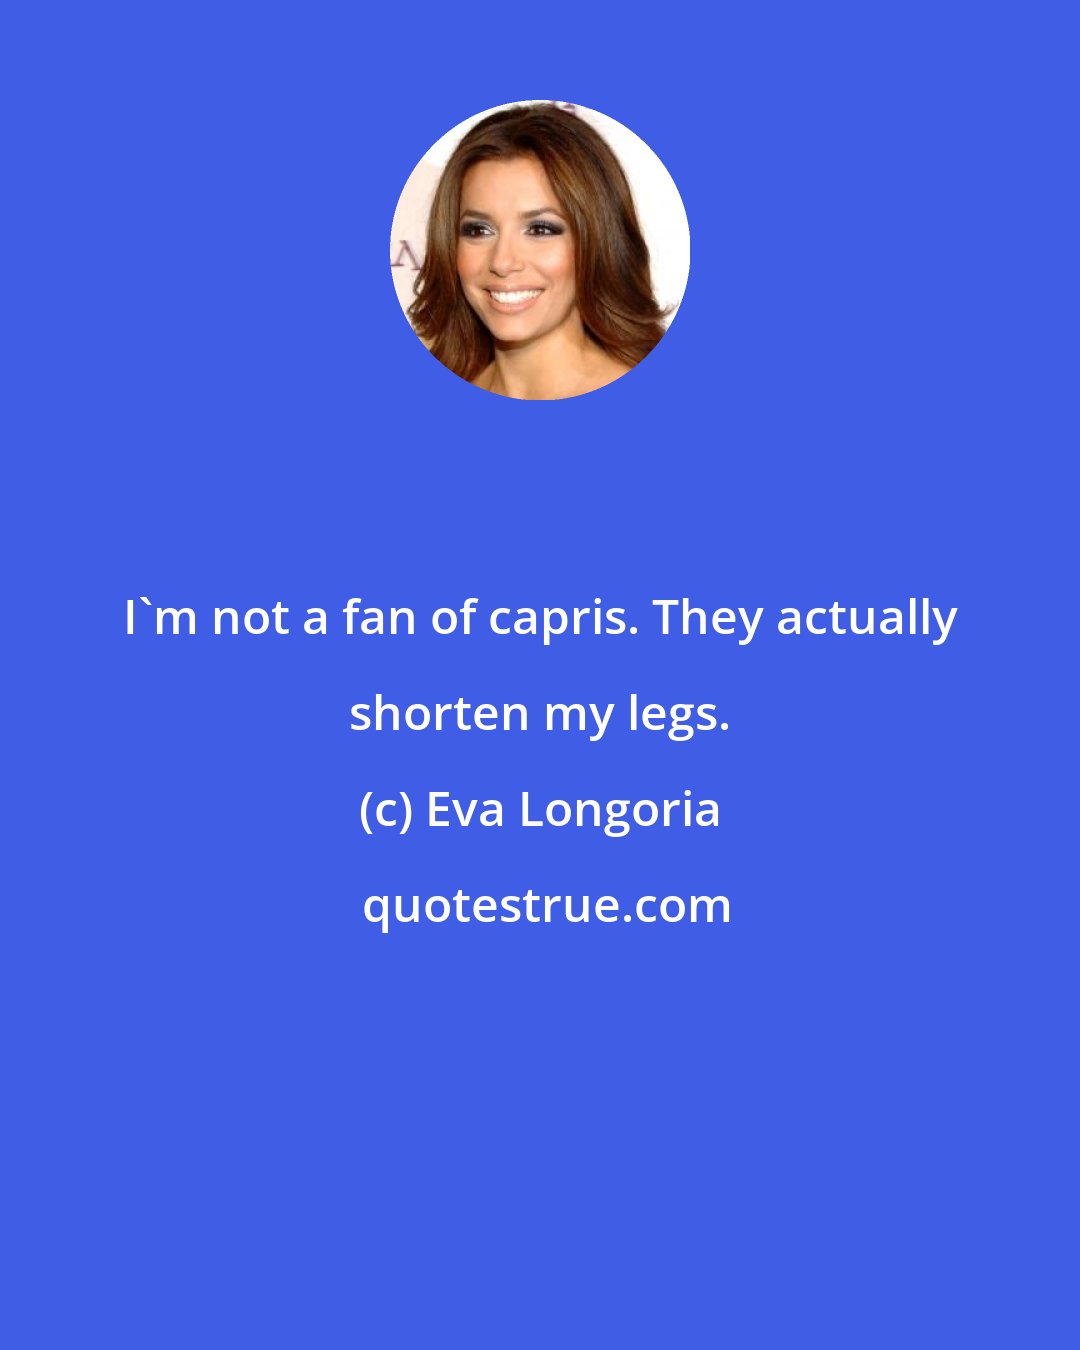 Eva Longoria: I'm not a fan of capris. They actually shorten my legs.